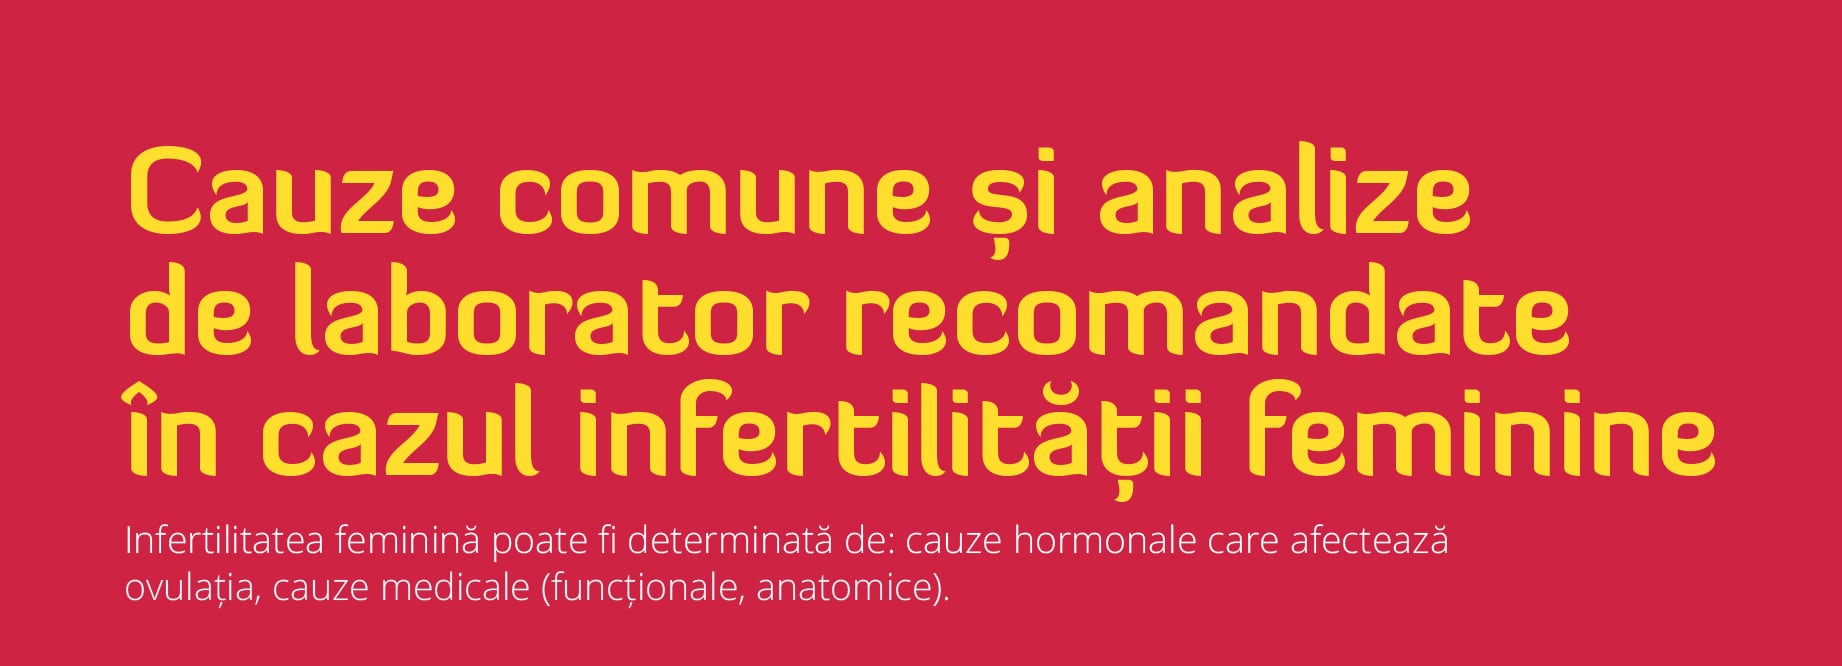 infertilitatea-feminina-clinica-sante-min